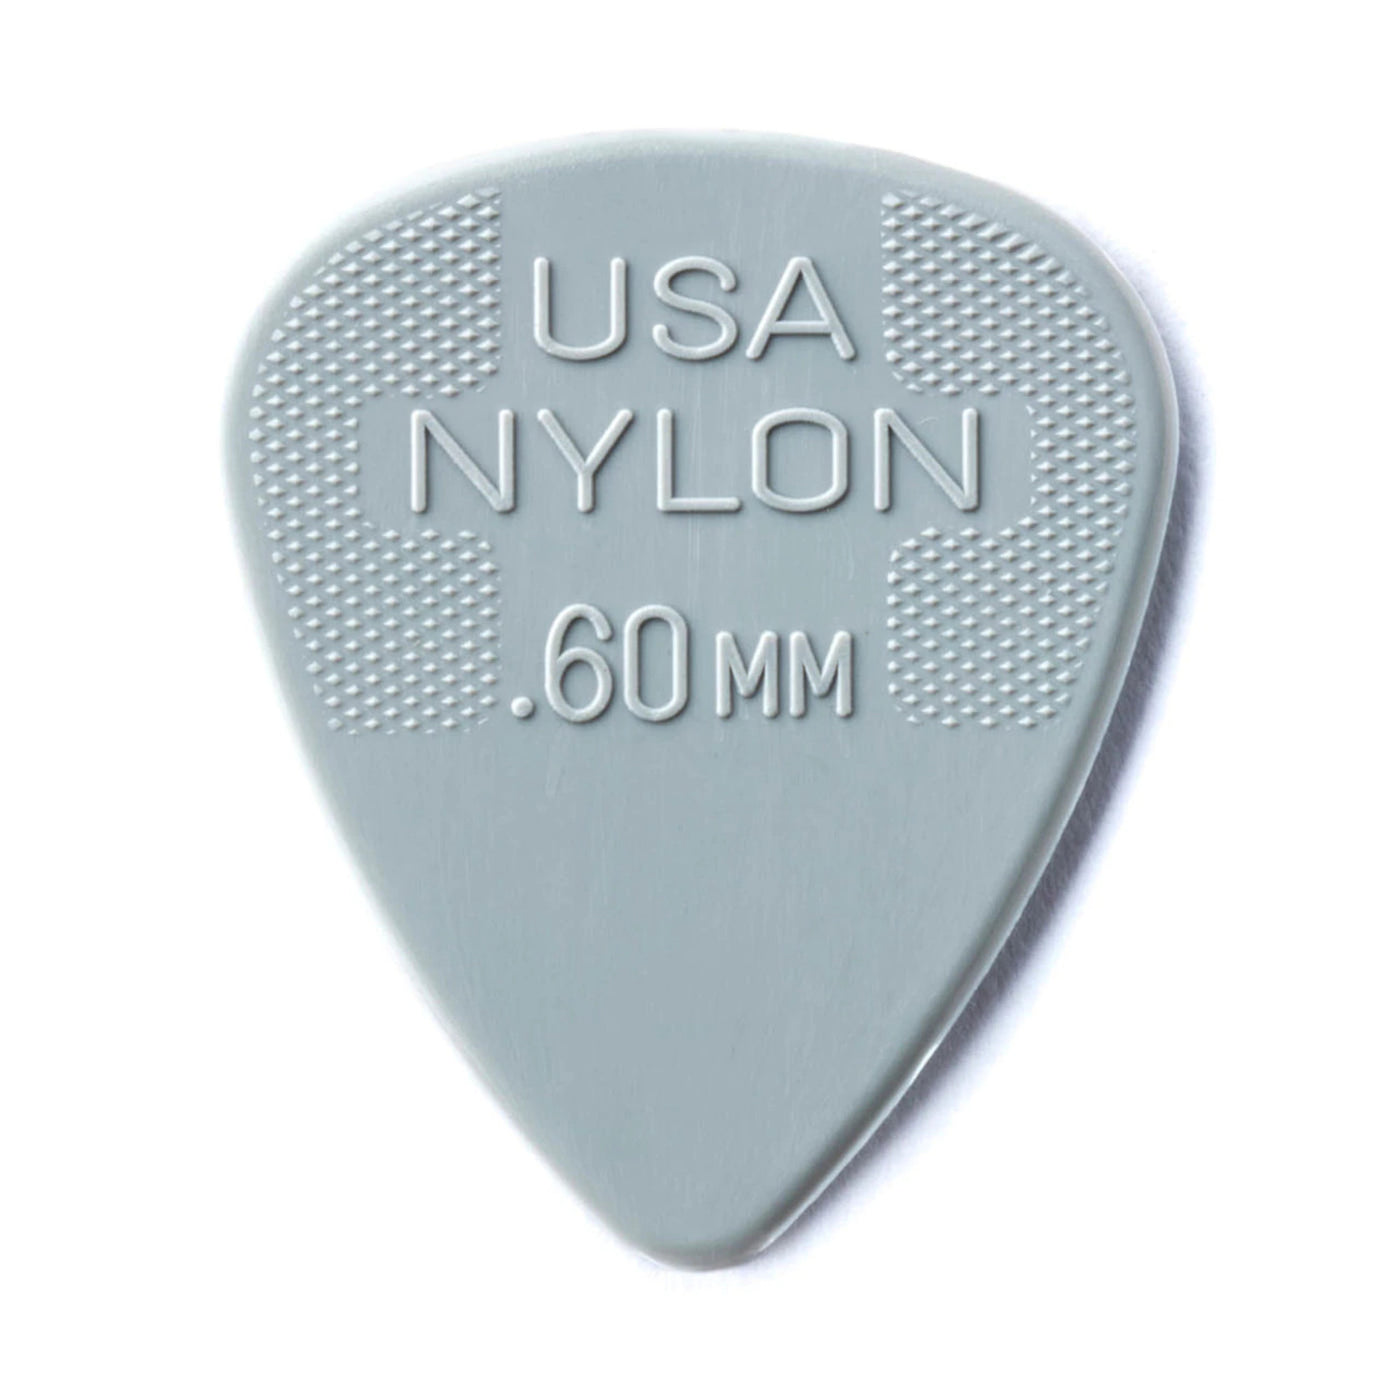 Dunlop 44P060 Nylon Standard Pick .60mm- 12 Pack